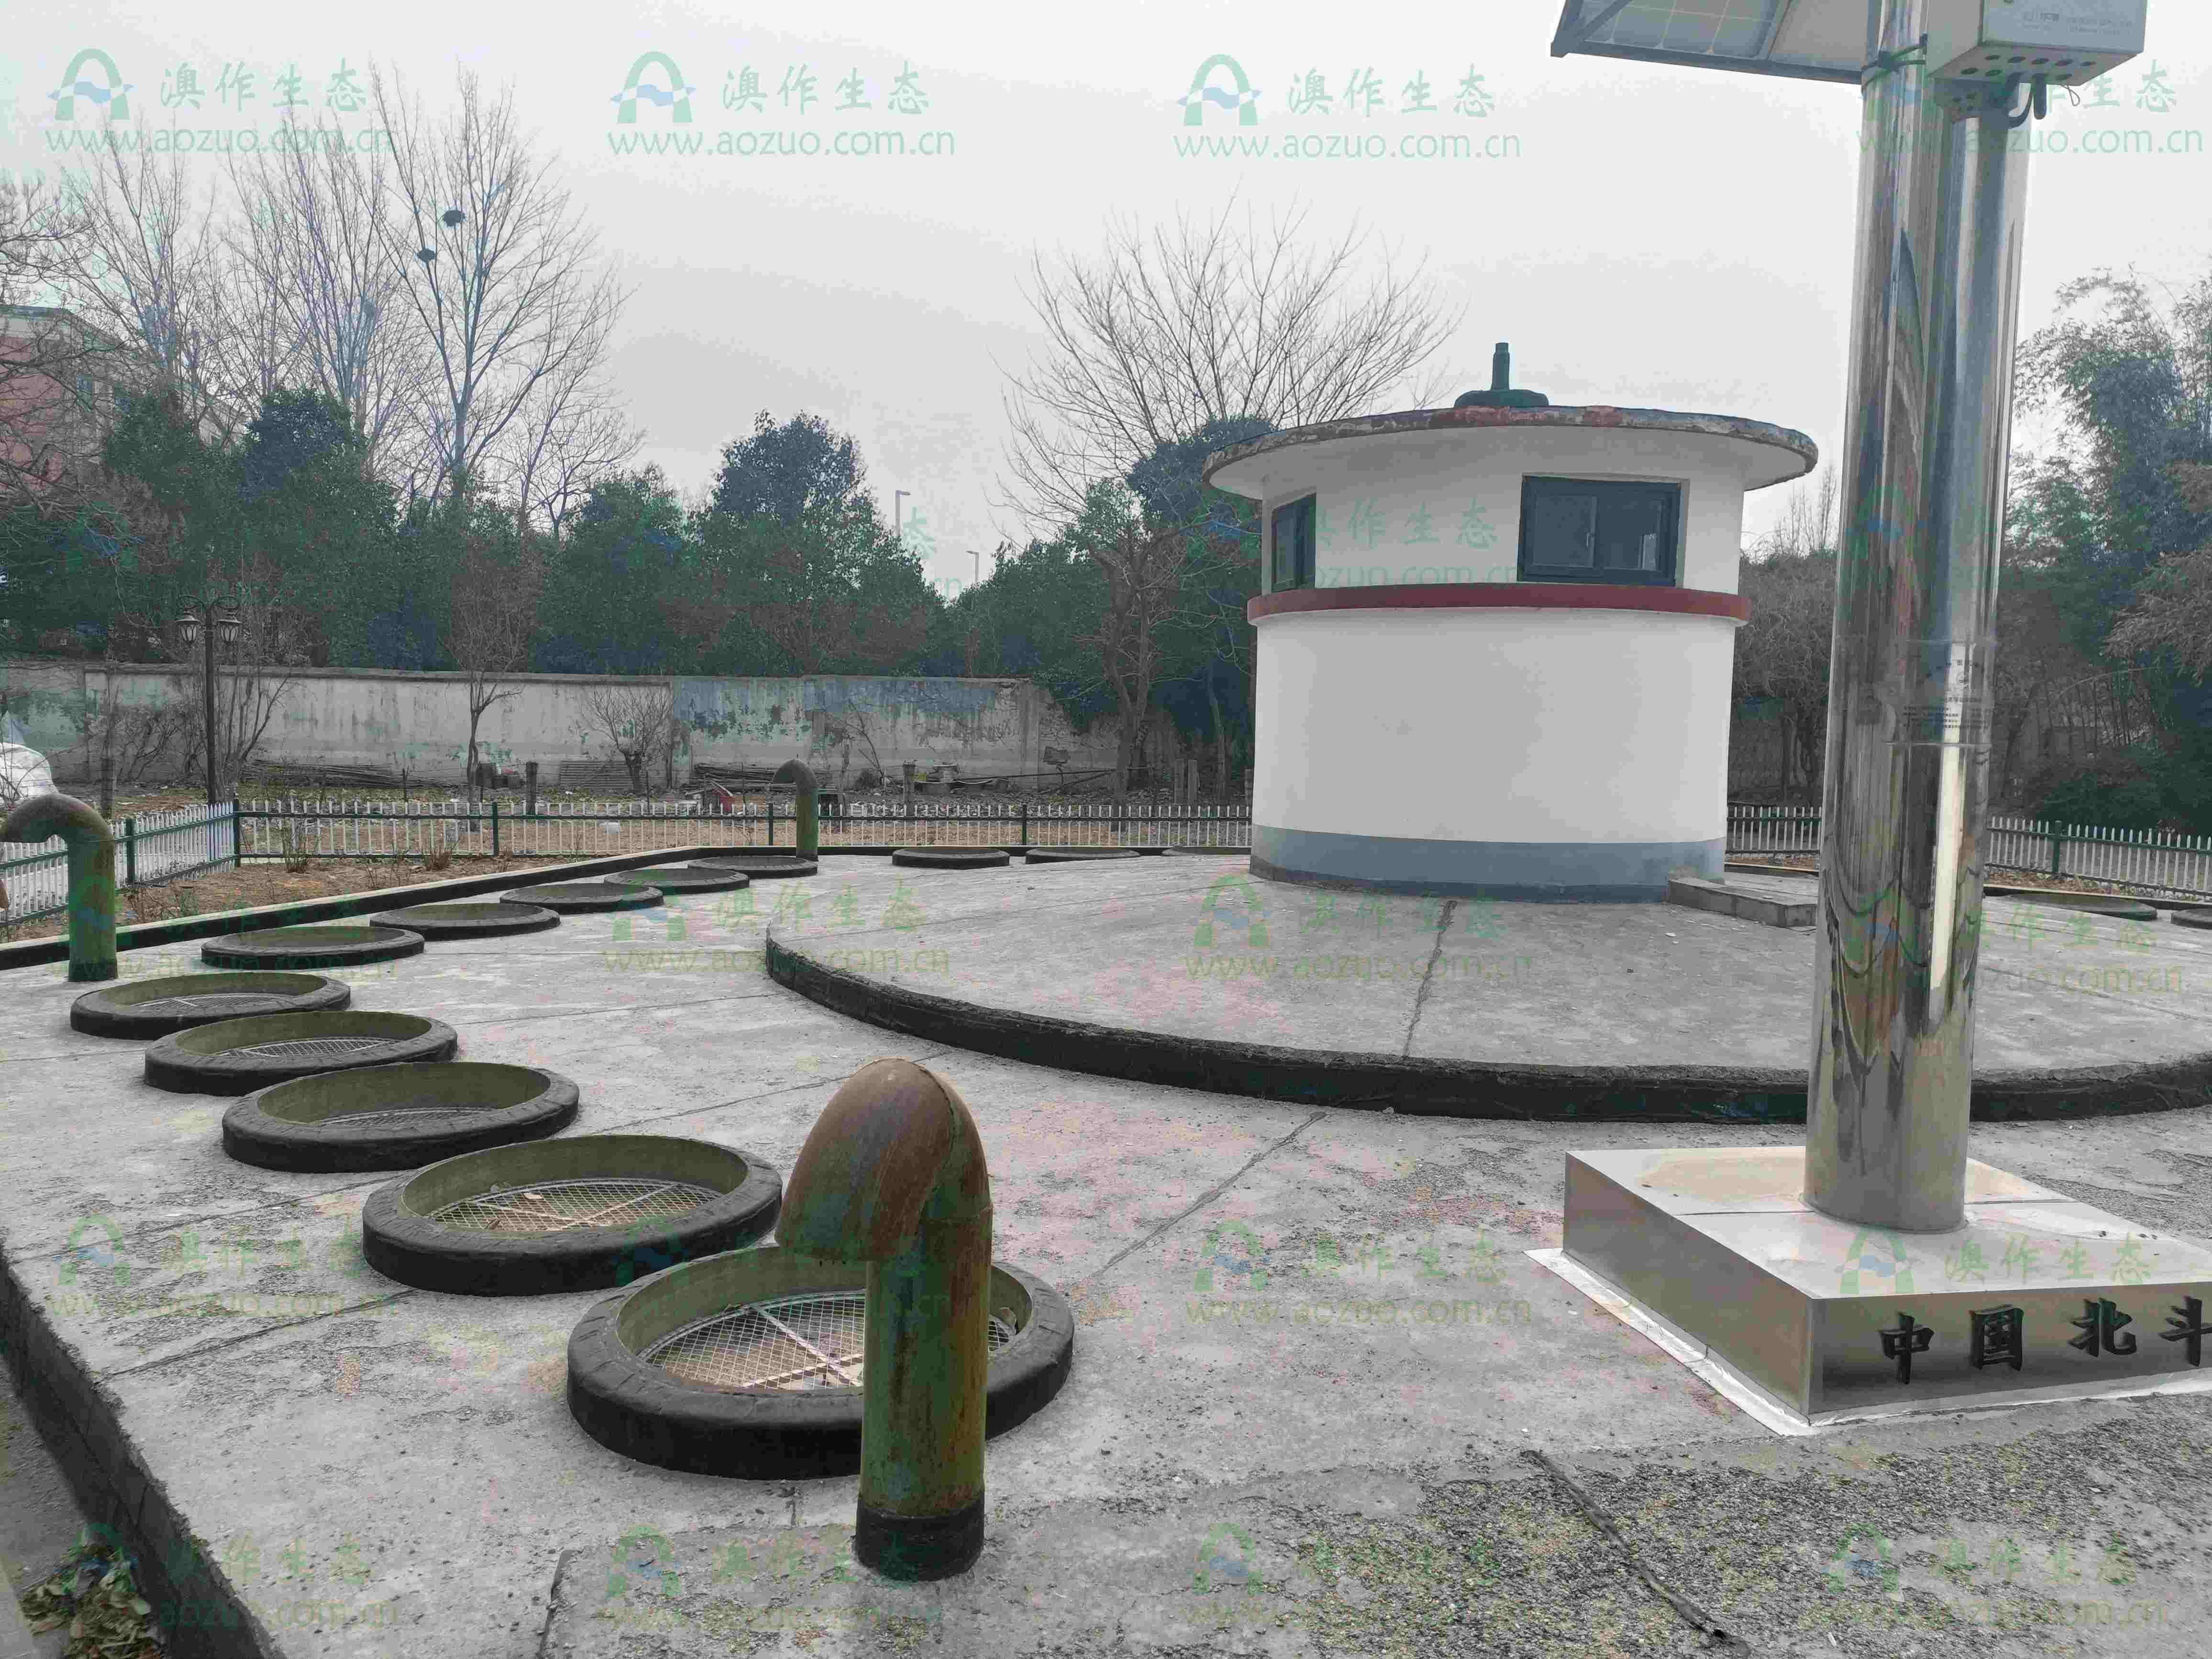 ENVILog-100土壤水分监测系统在河南省自然资源监测和国土整治院安装完成